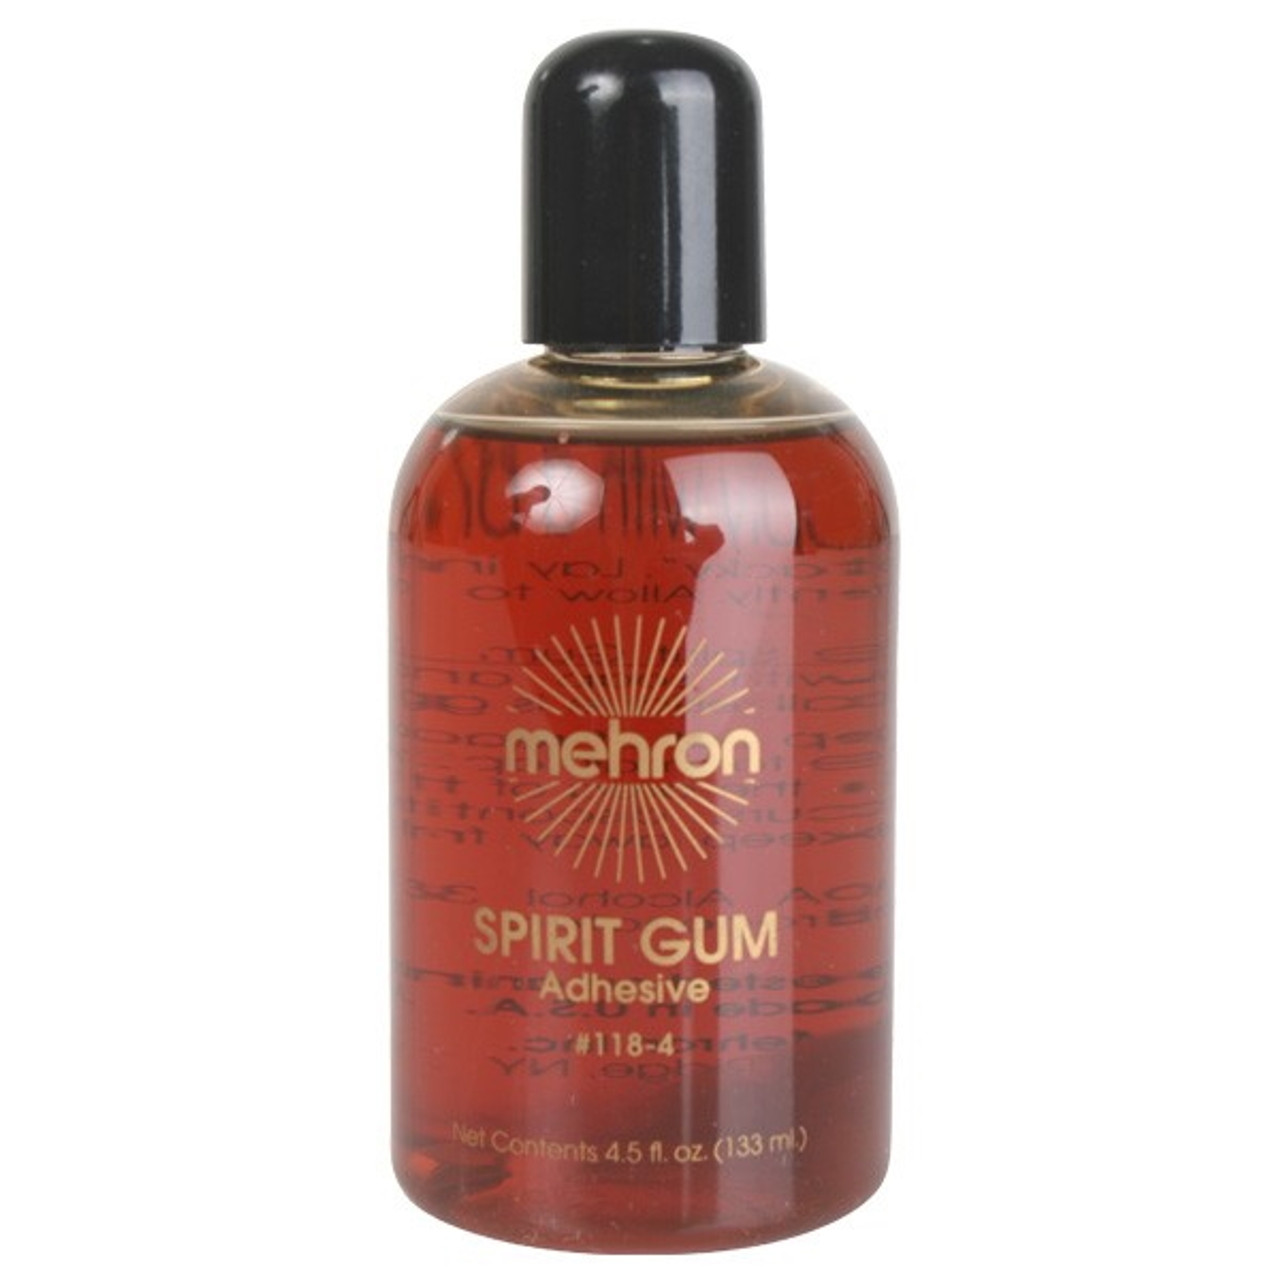  Mehron Makeup Spirit Gum & Remover Combo Kit, Spirit Gum  Adhesive and Remover